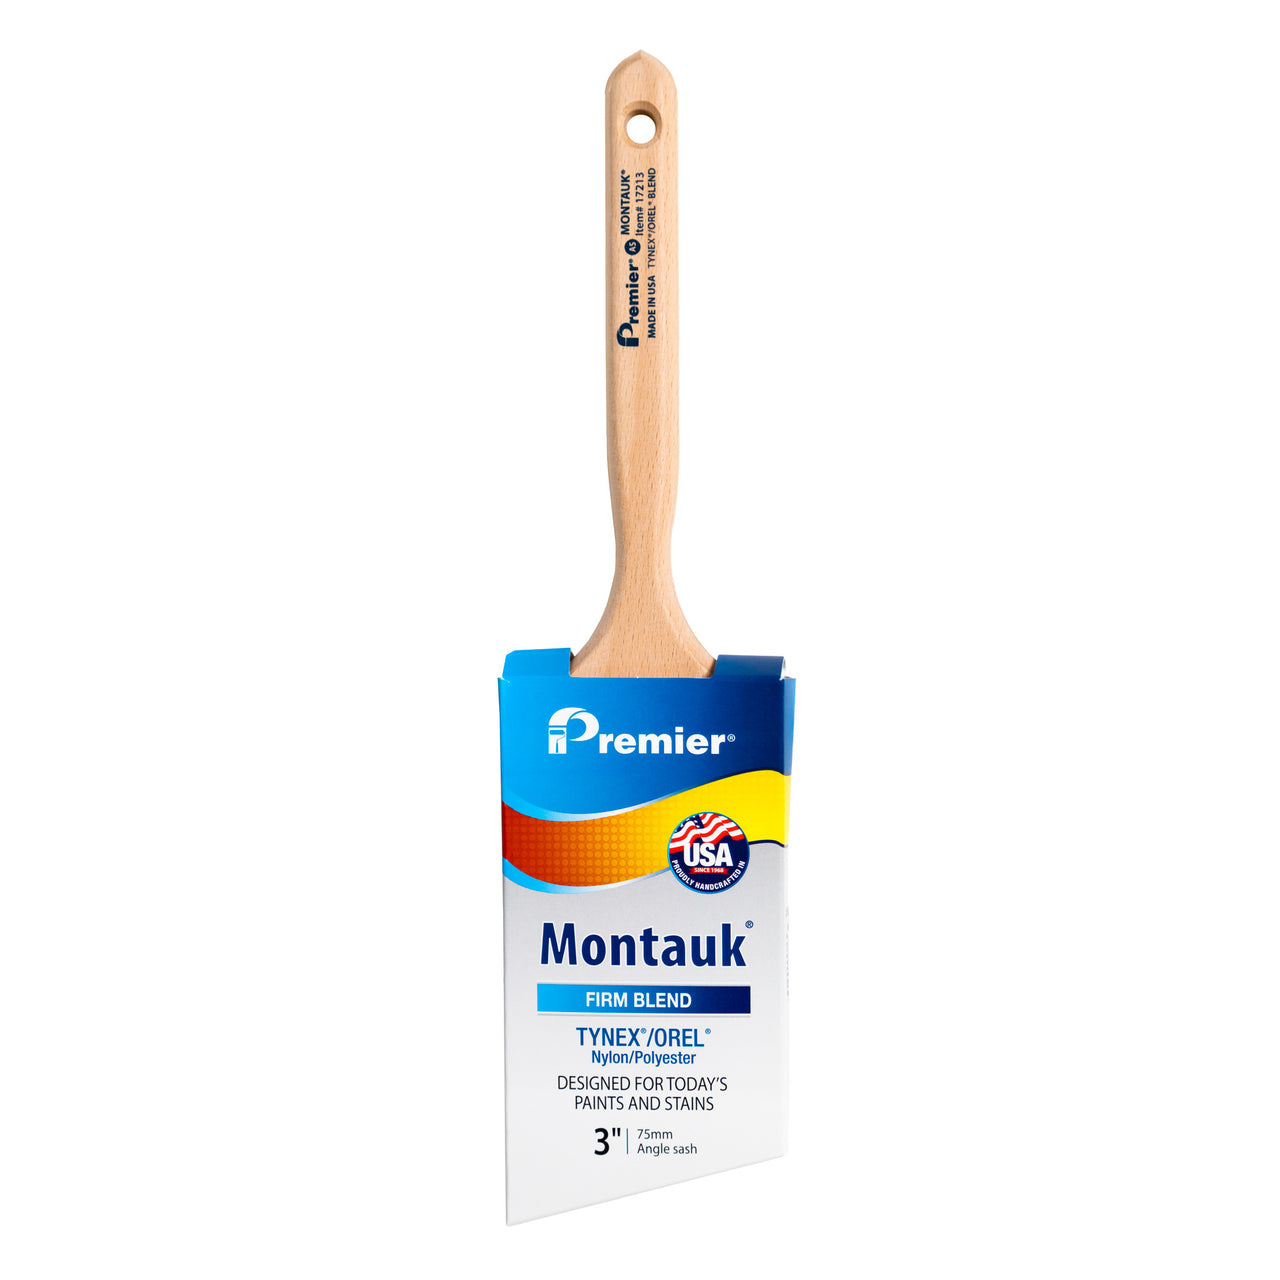 Premier Montauk Paint Brush